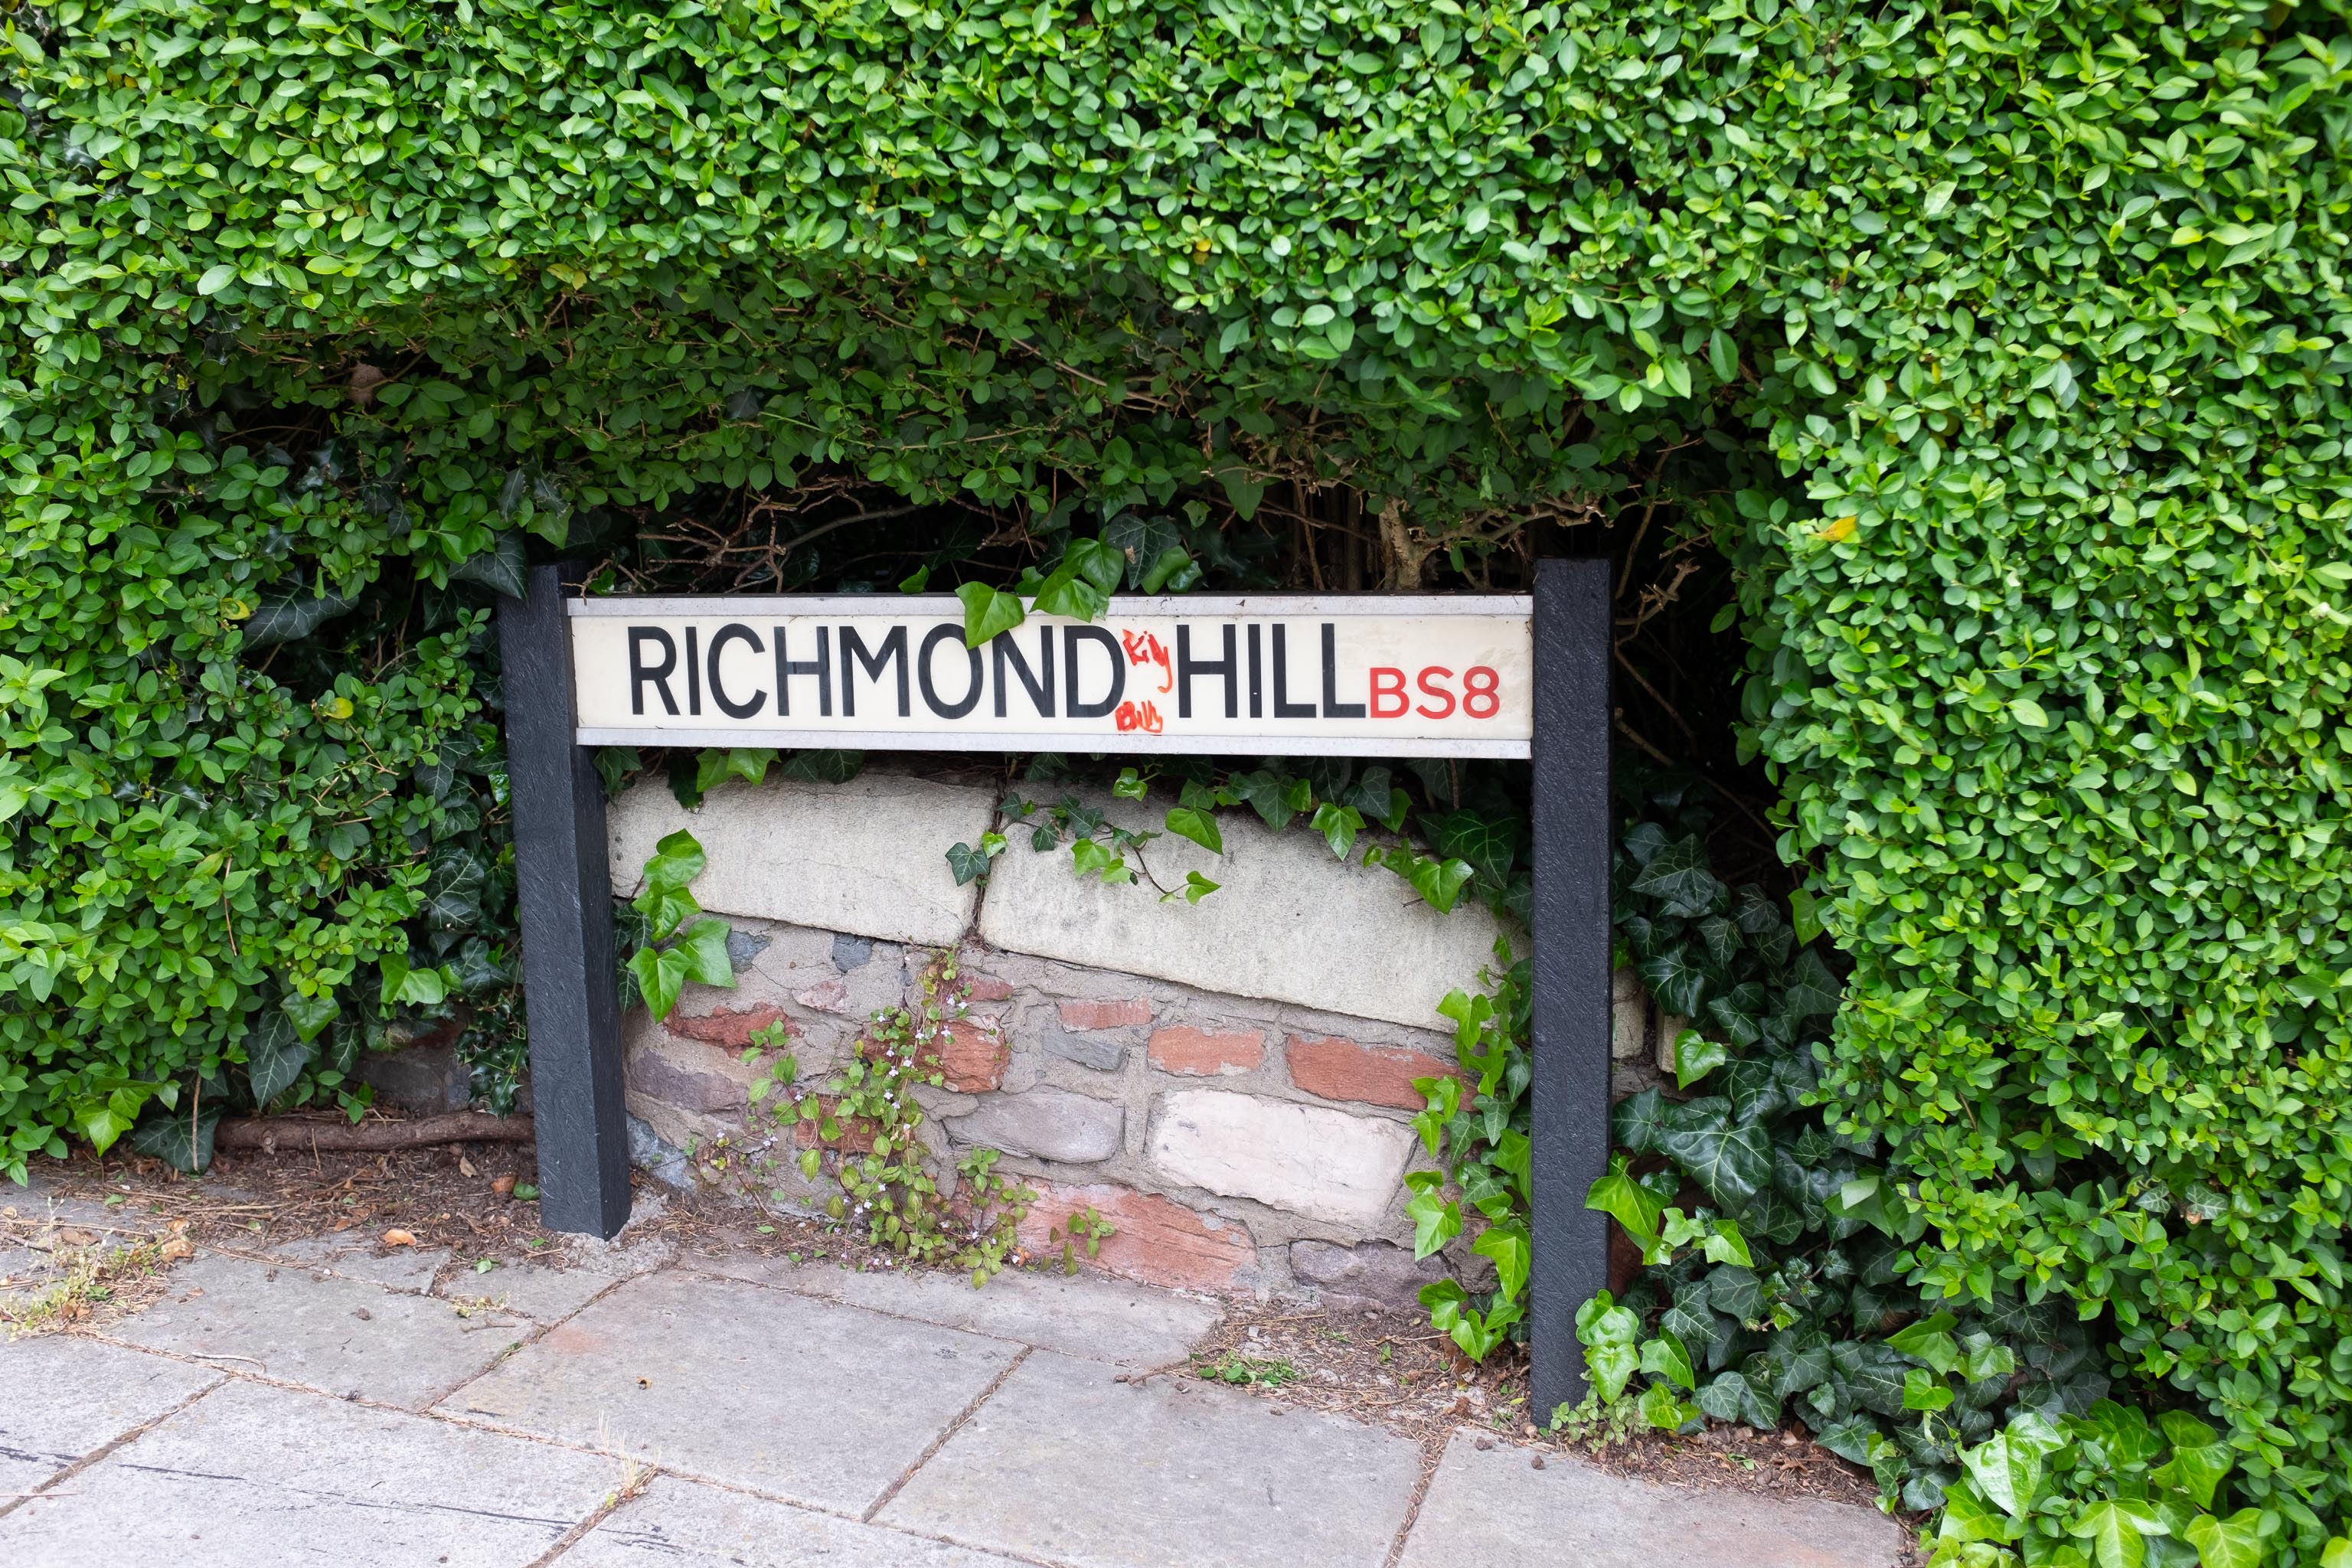 Richmond Hill
